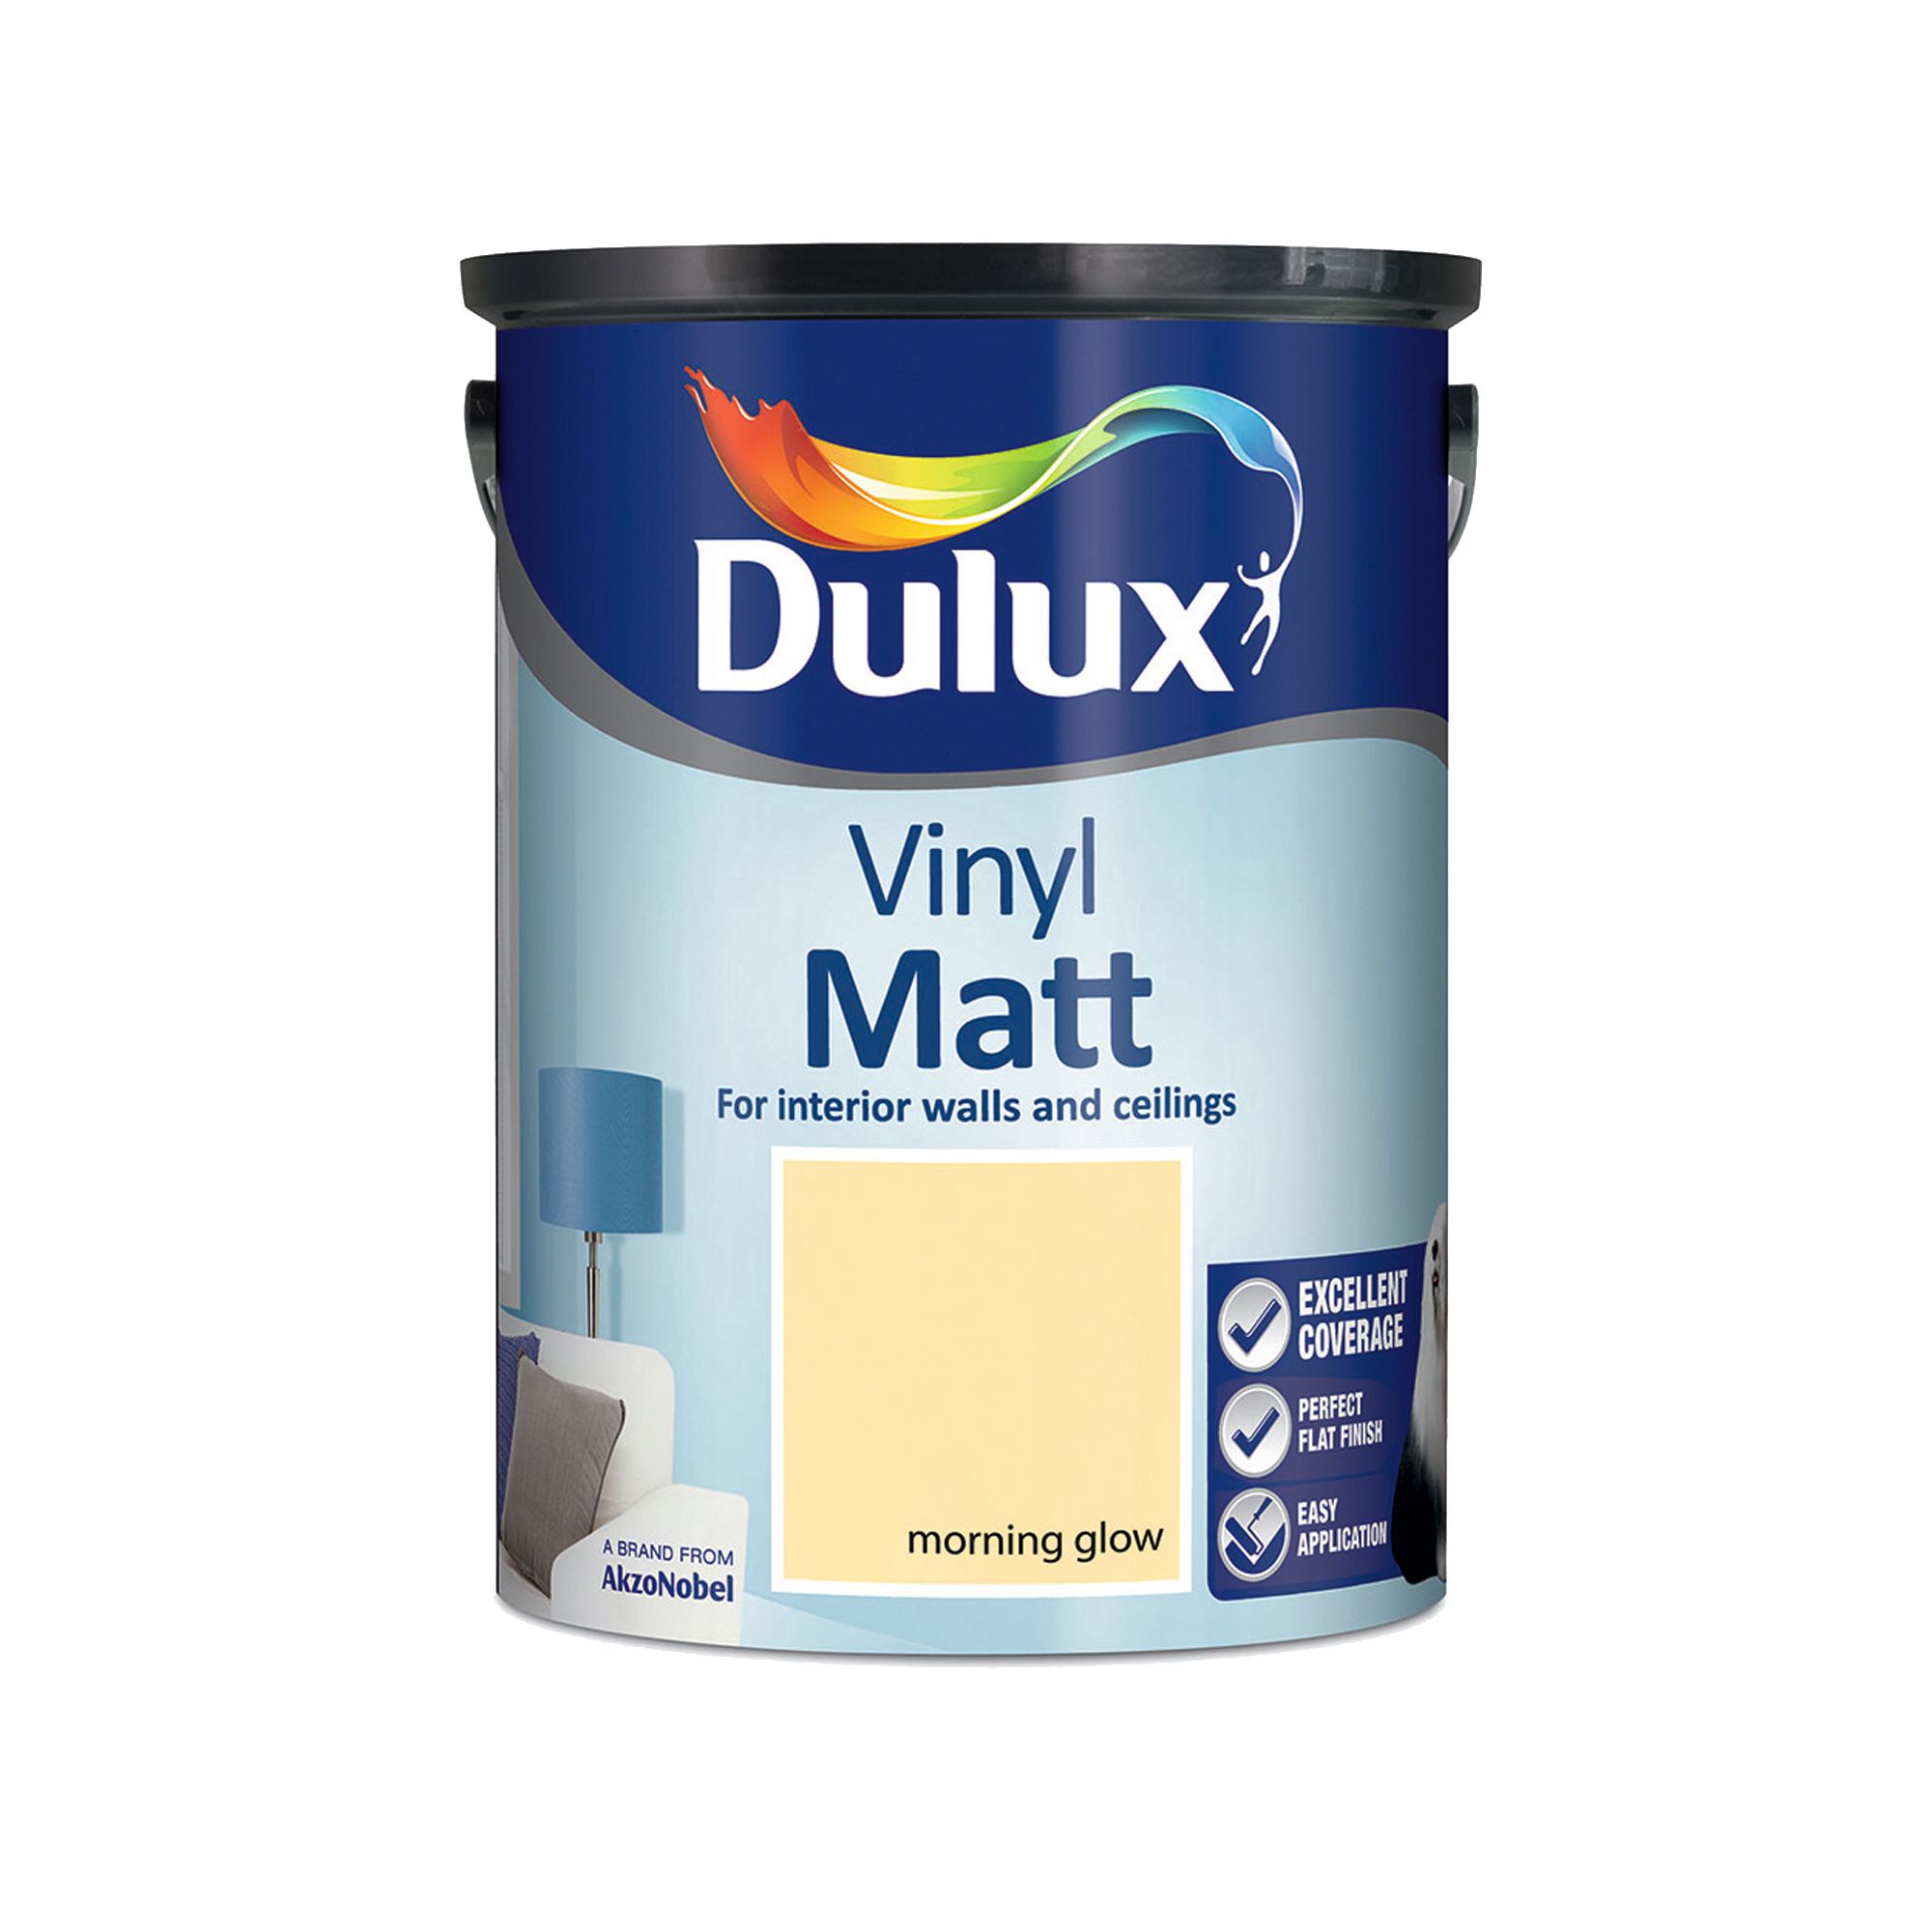 Dulux Easycare Morning glow Vinyl matt Emulsion paint, 5L